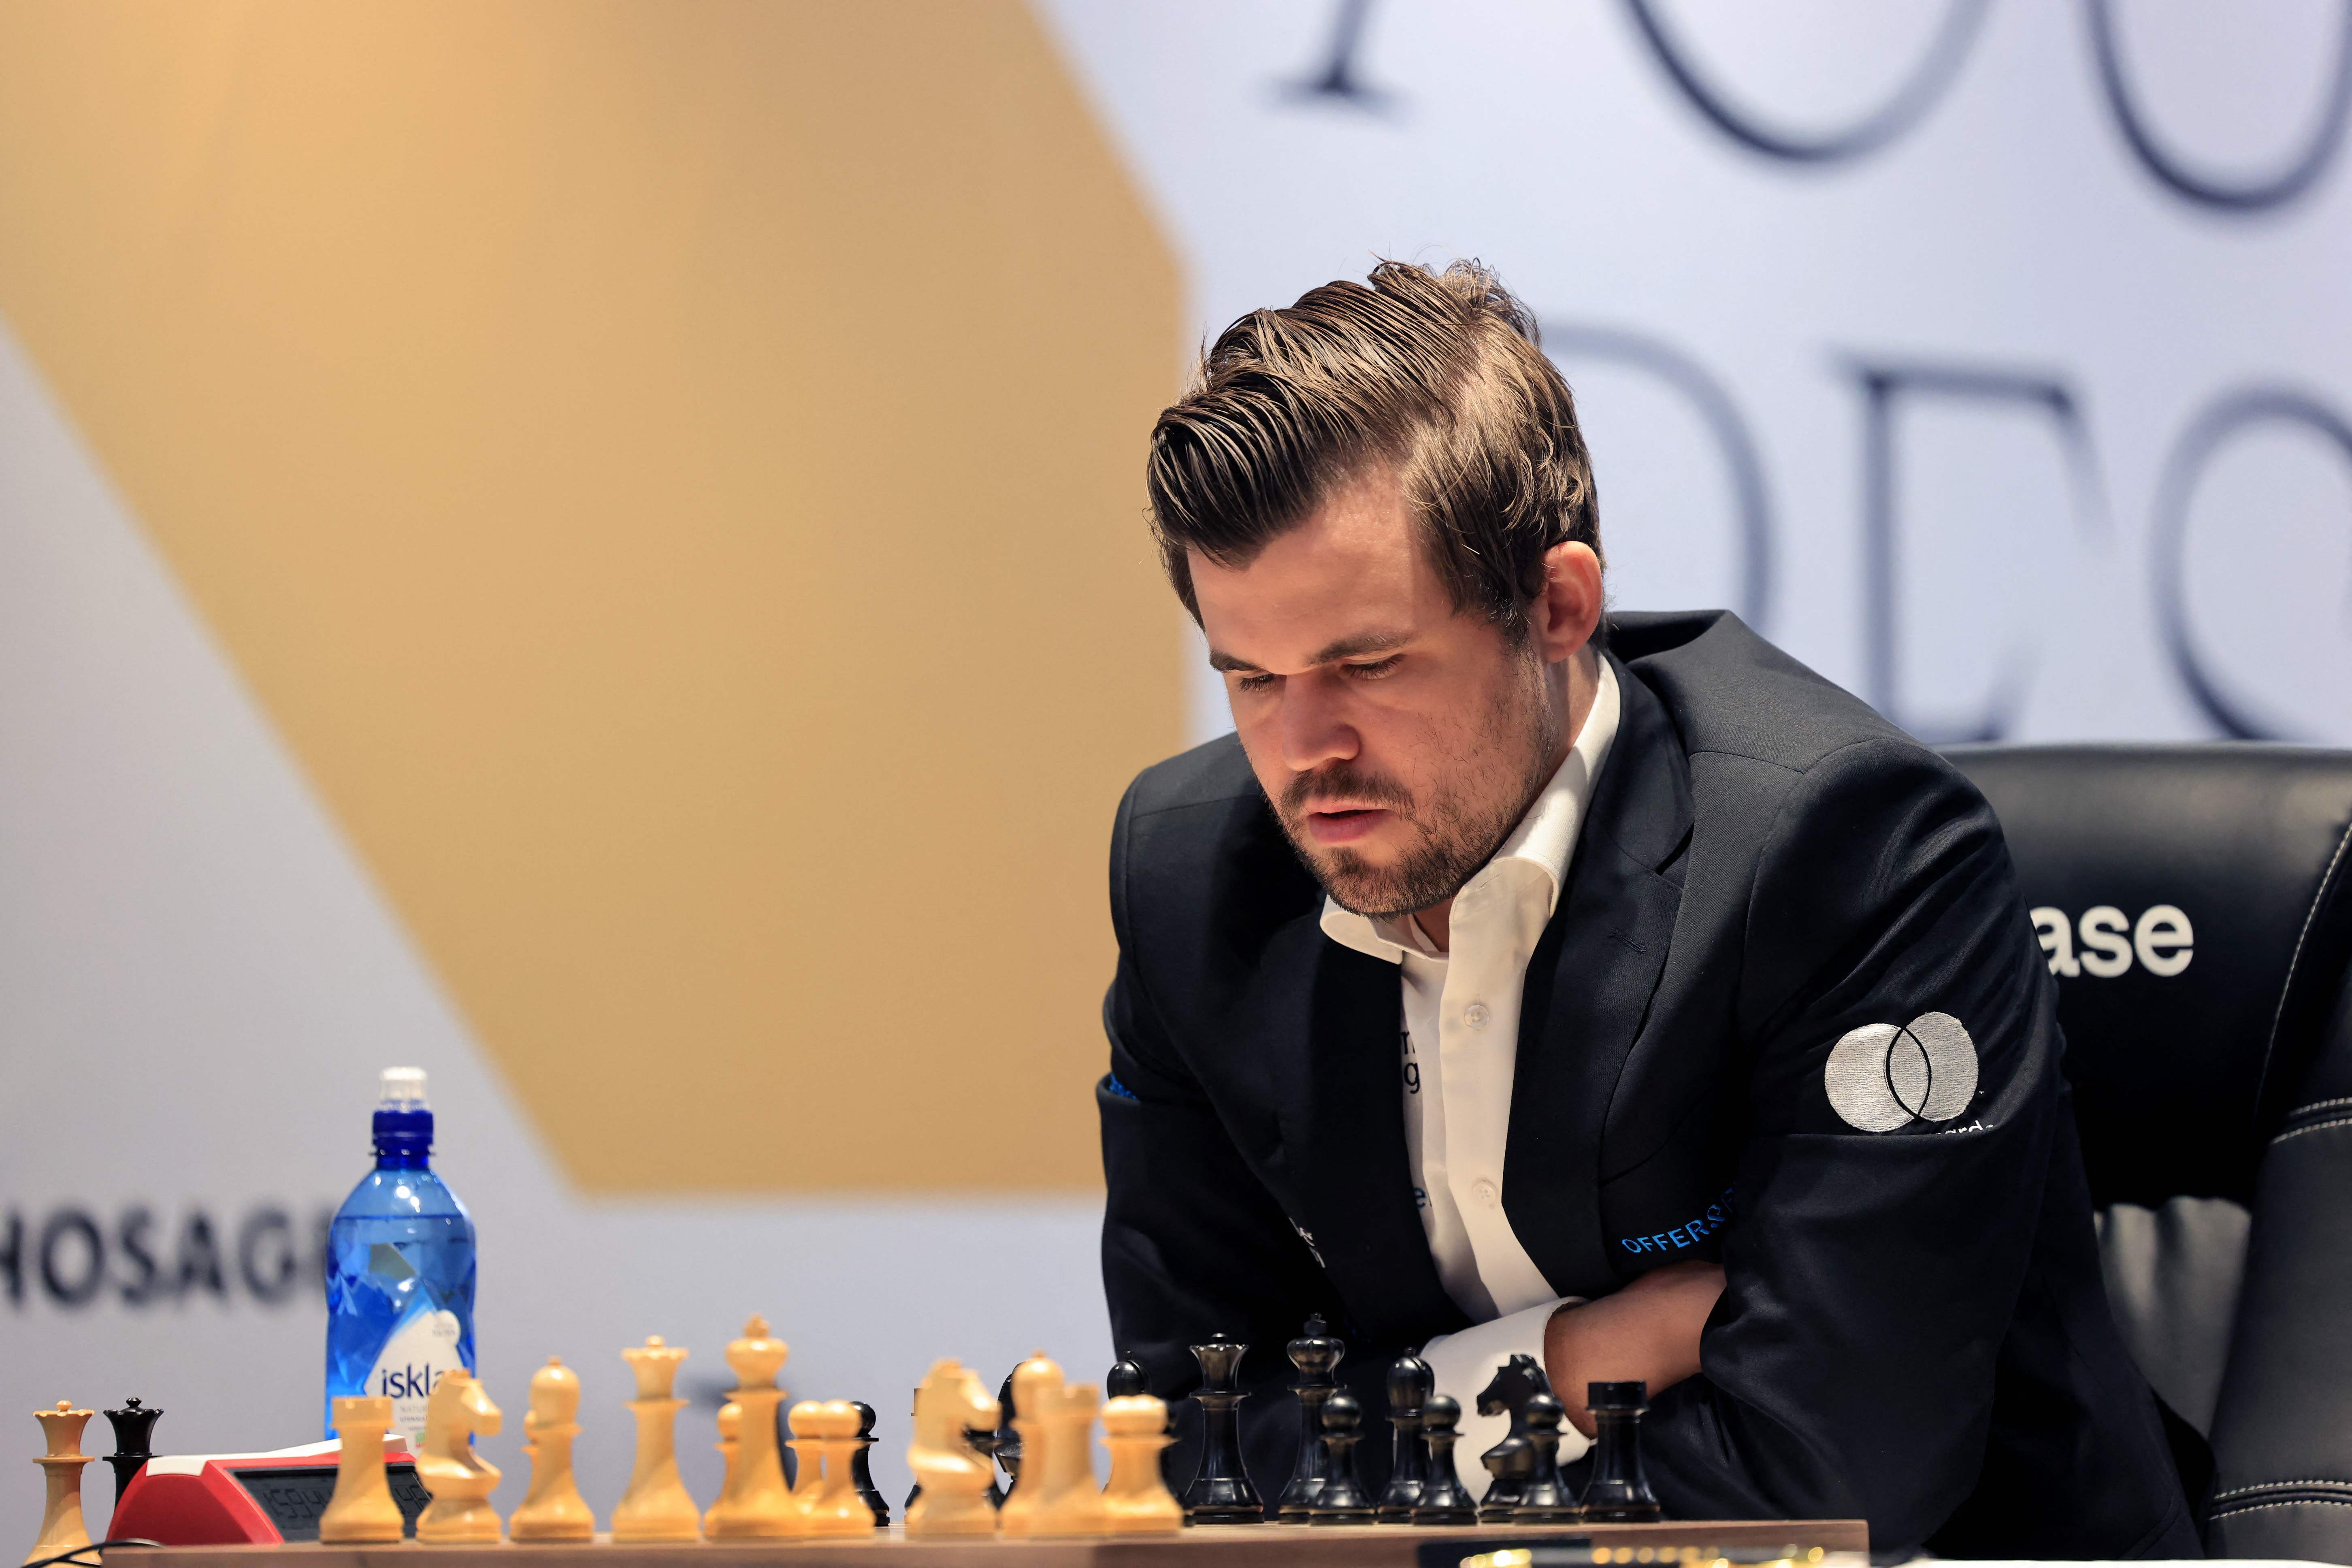 Magnus Carlsen Says He'll Only Defend His Title Against Teenage Genius  Alireza Firouzja